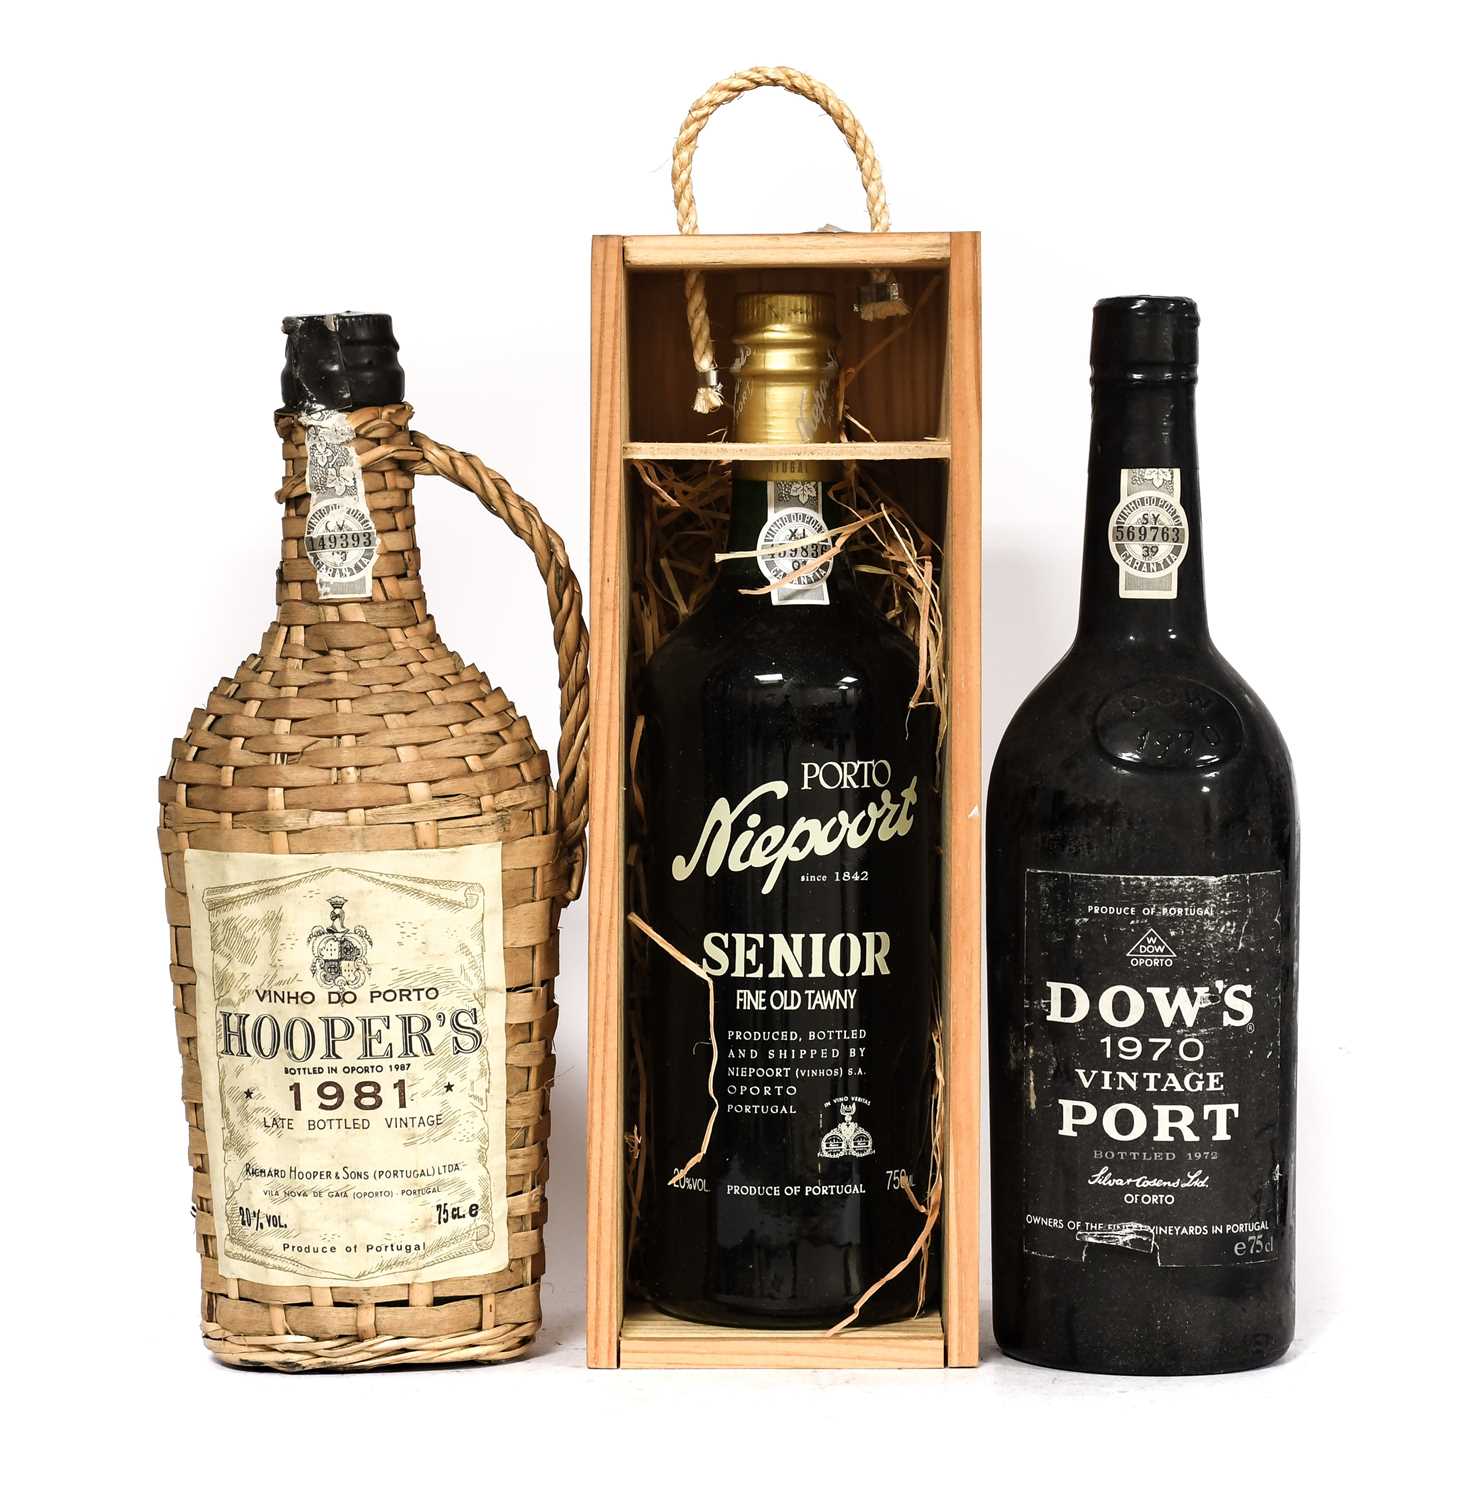 Dow's 1970 Vintage Port (two bottles), Warre's Warrior Finest Port (one bottle), Hooper's 1981 - Image 5 of 5